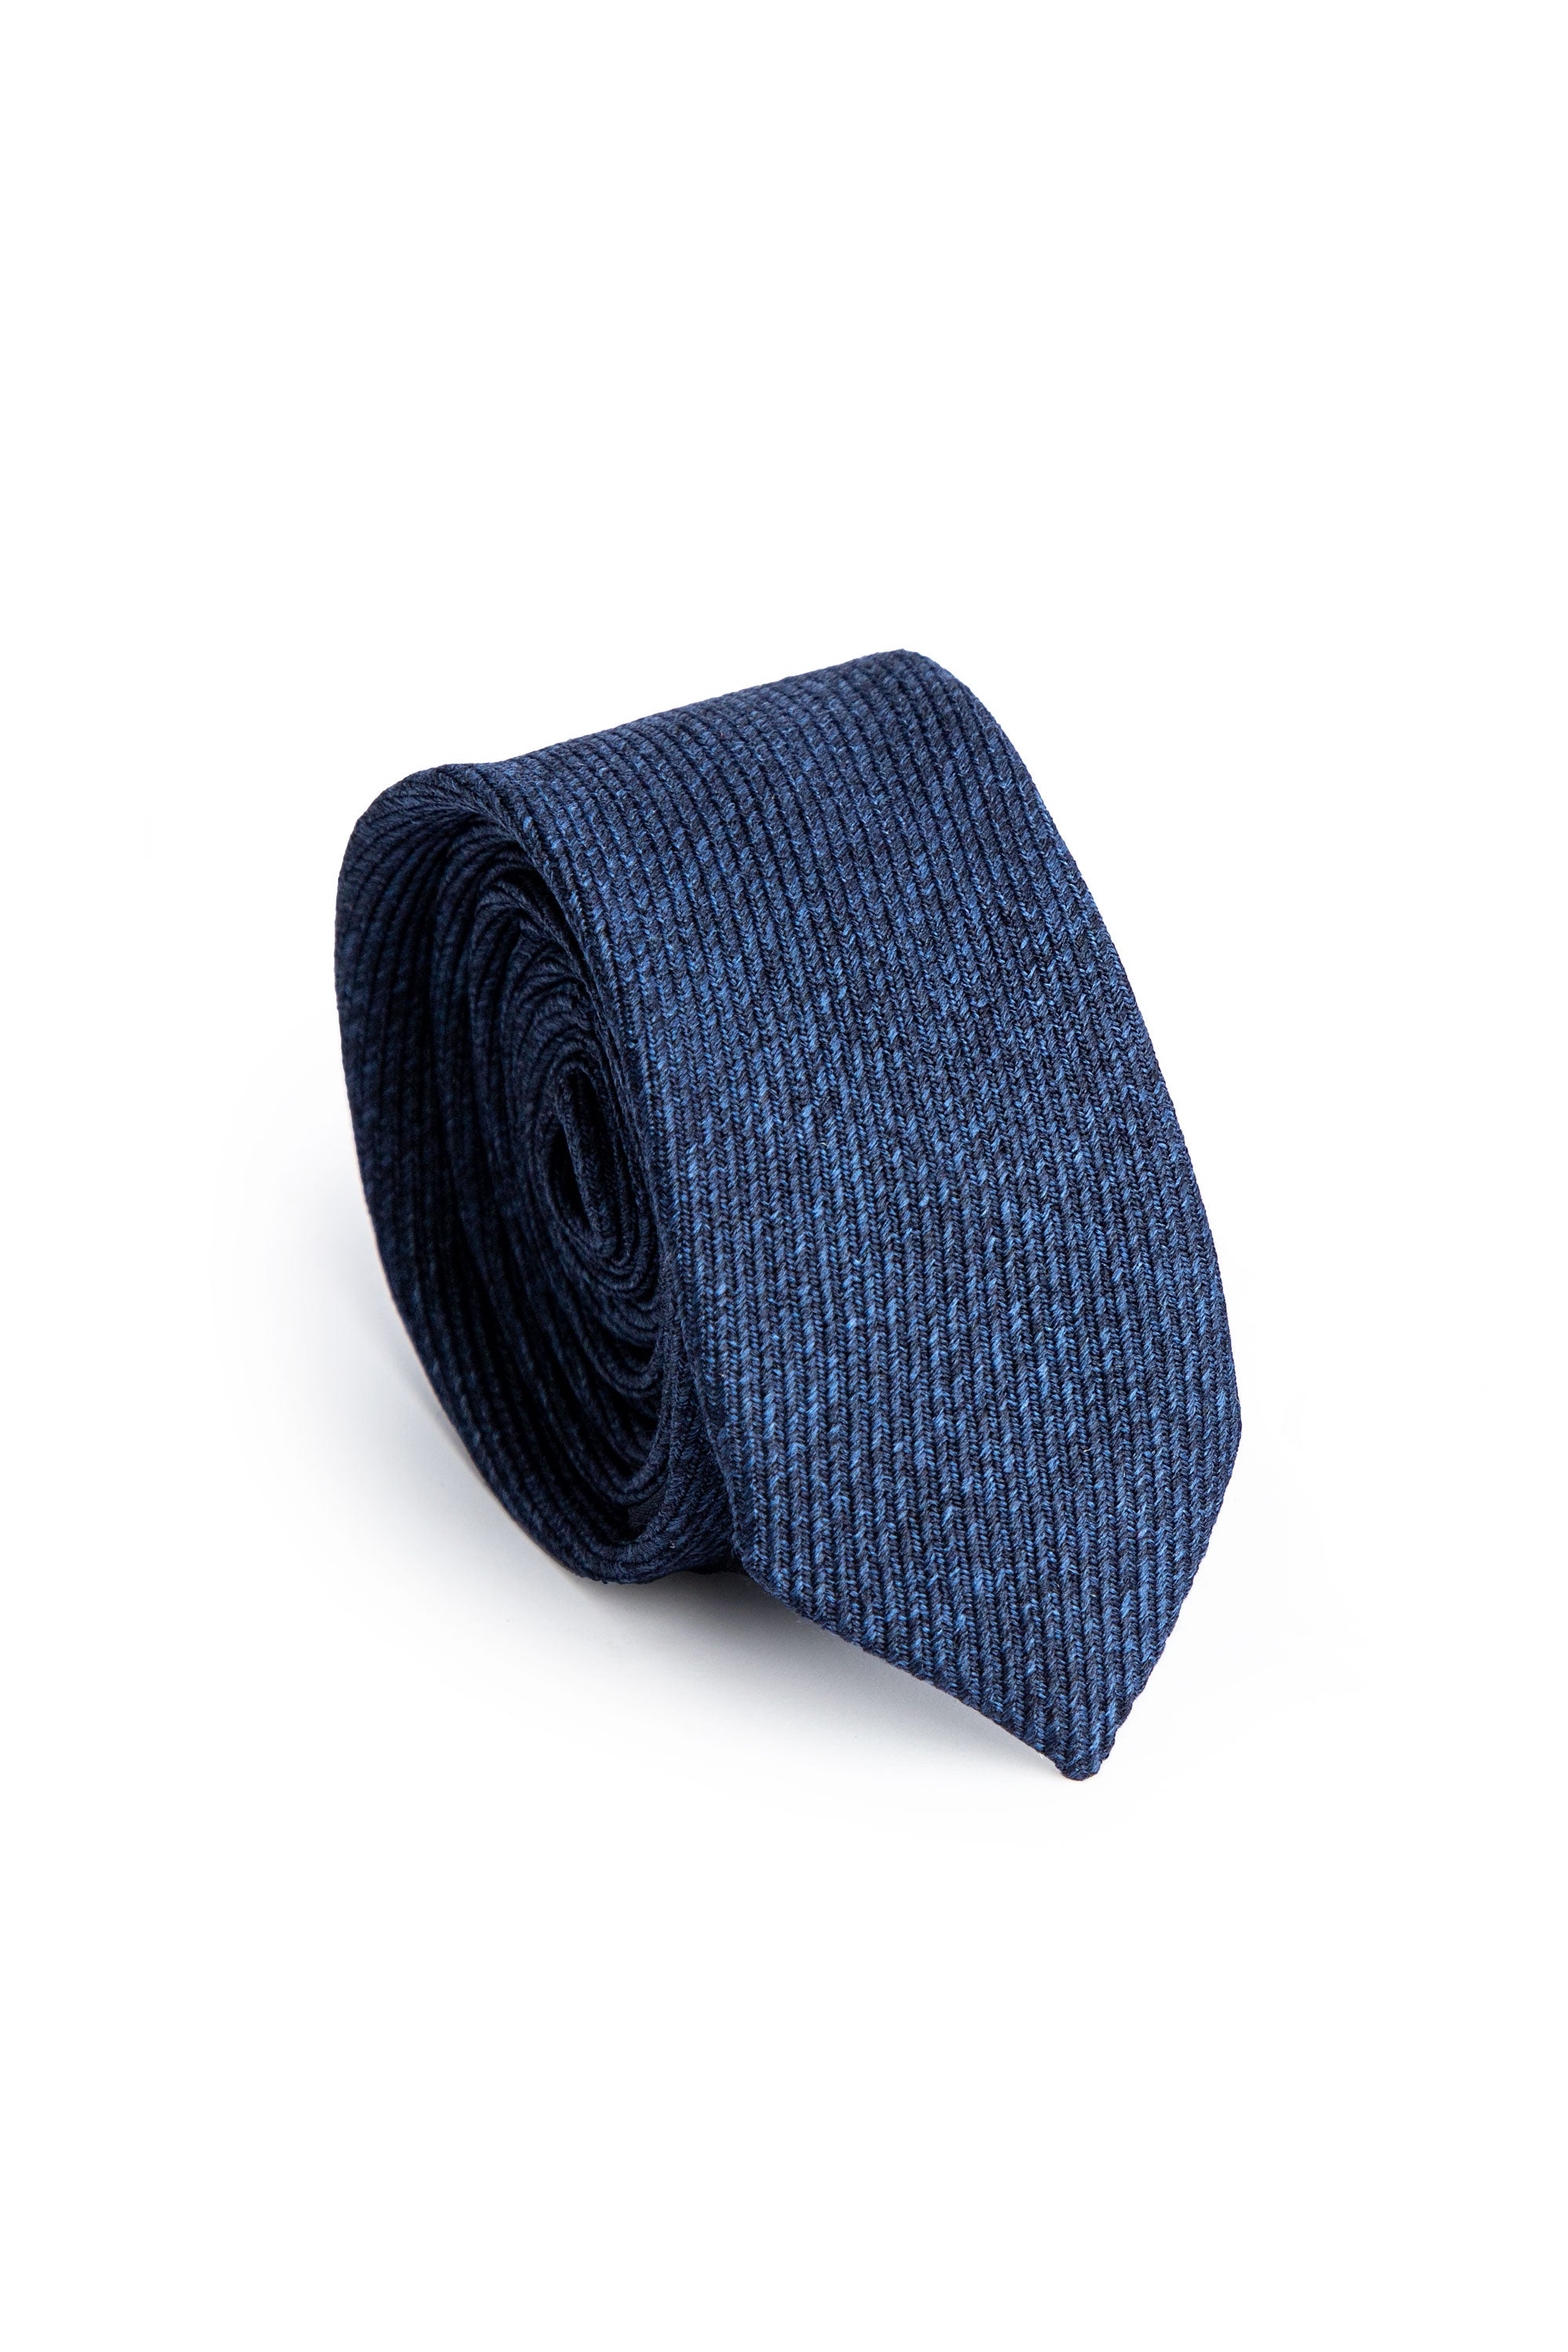 Azure Tweed